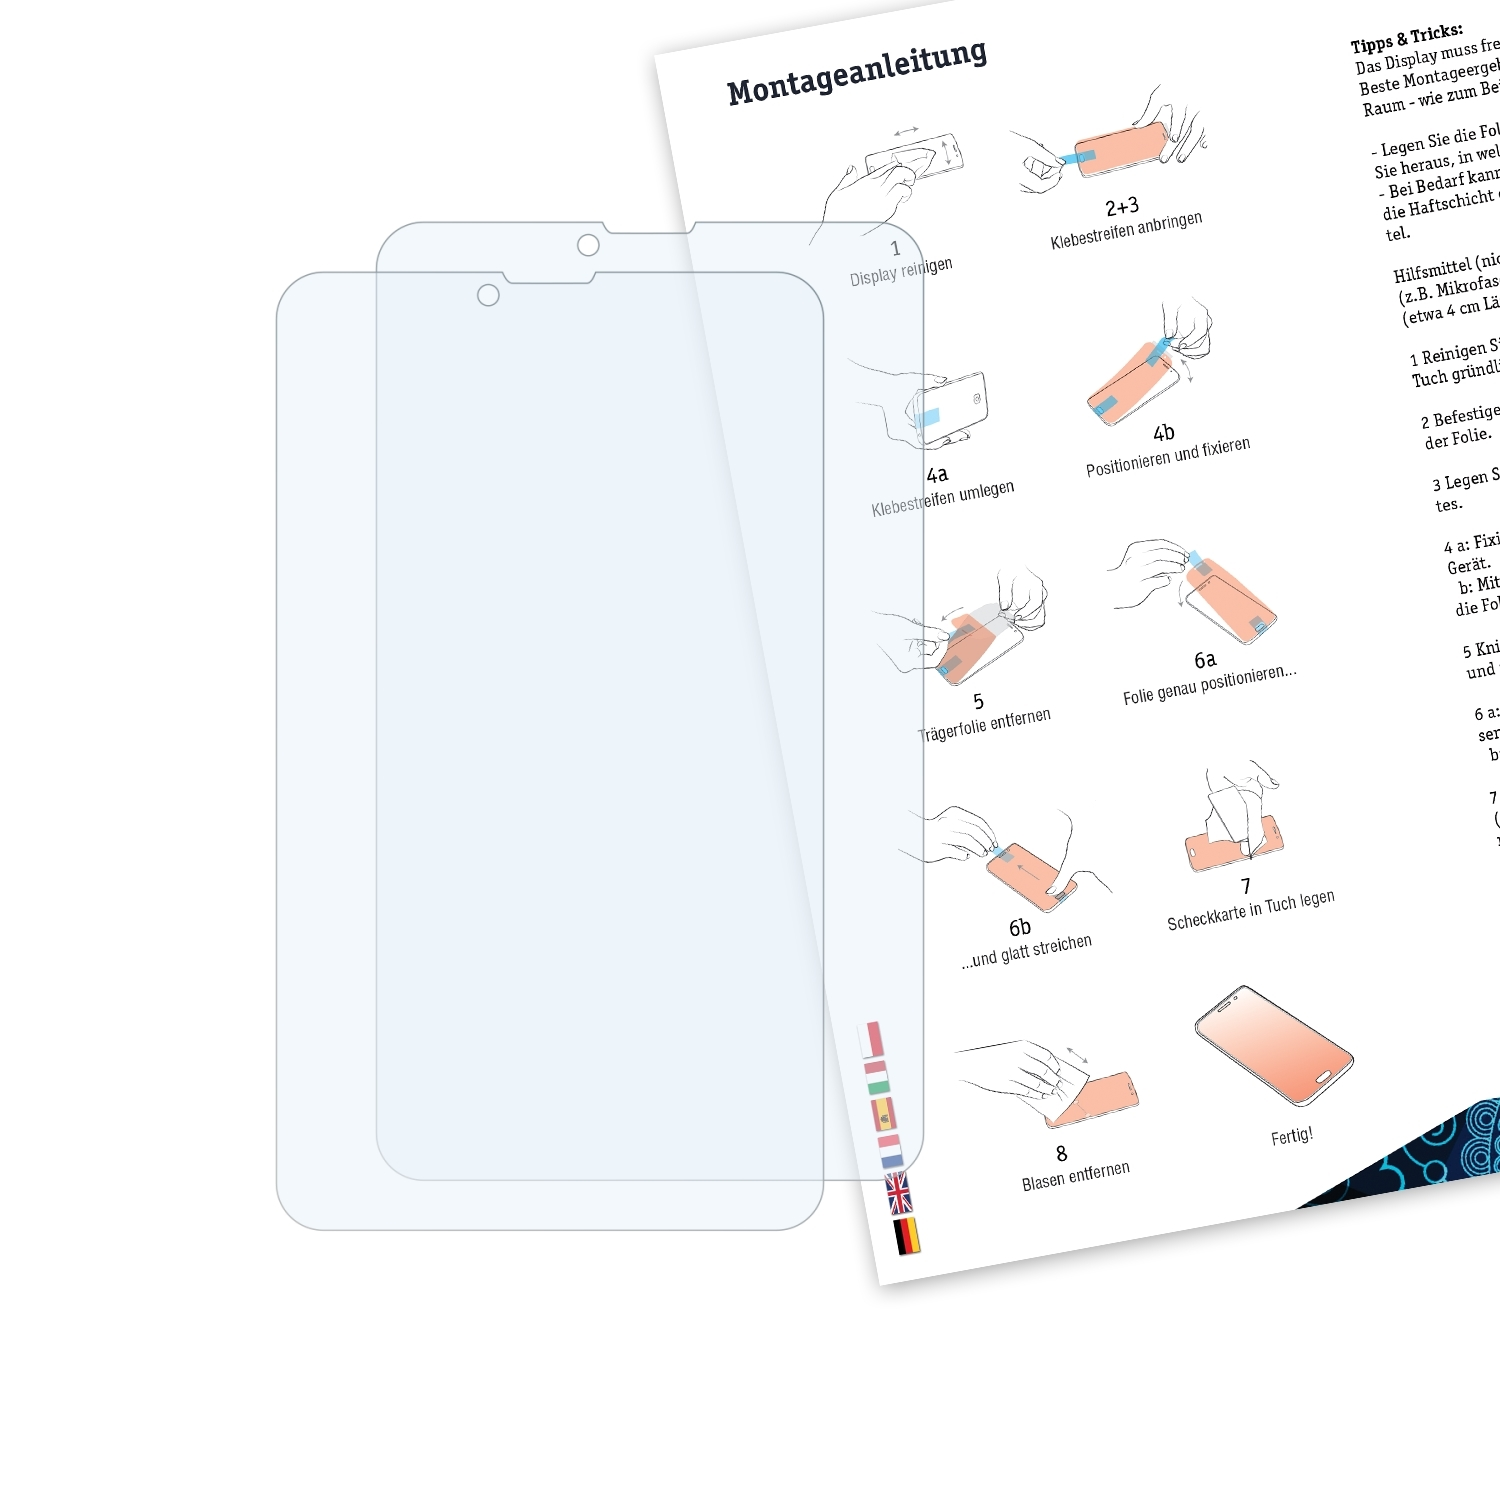 BRUNI 2x Basics-Clear Schutzfolie(für Mediacom SmartPad 7) Mx